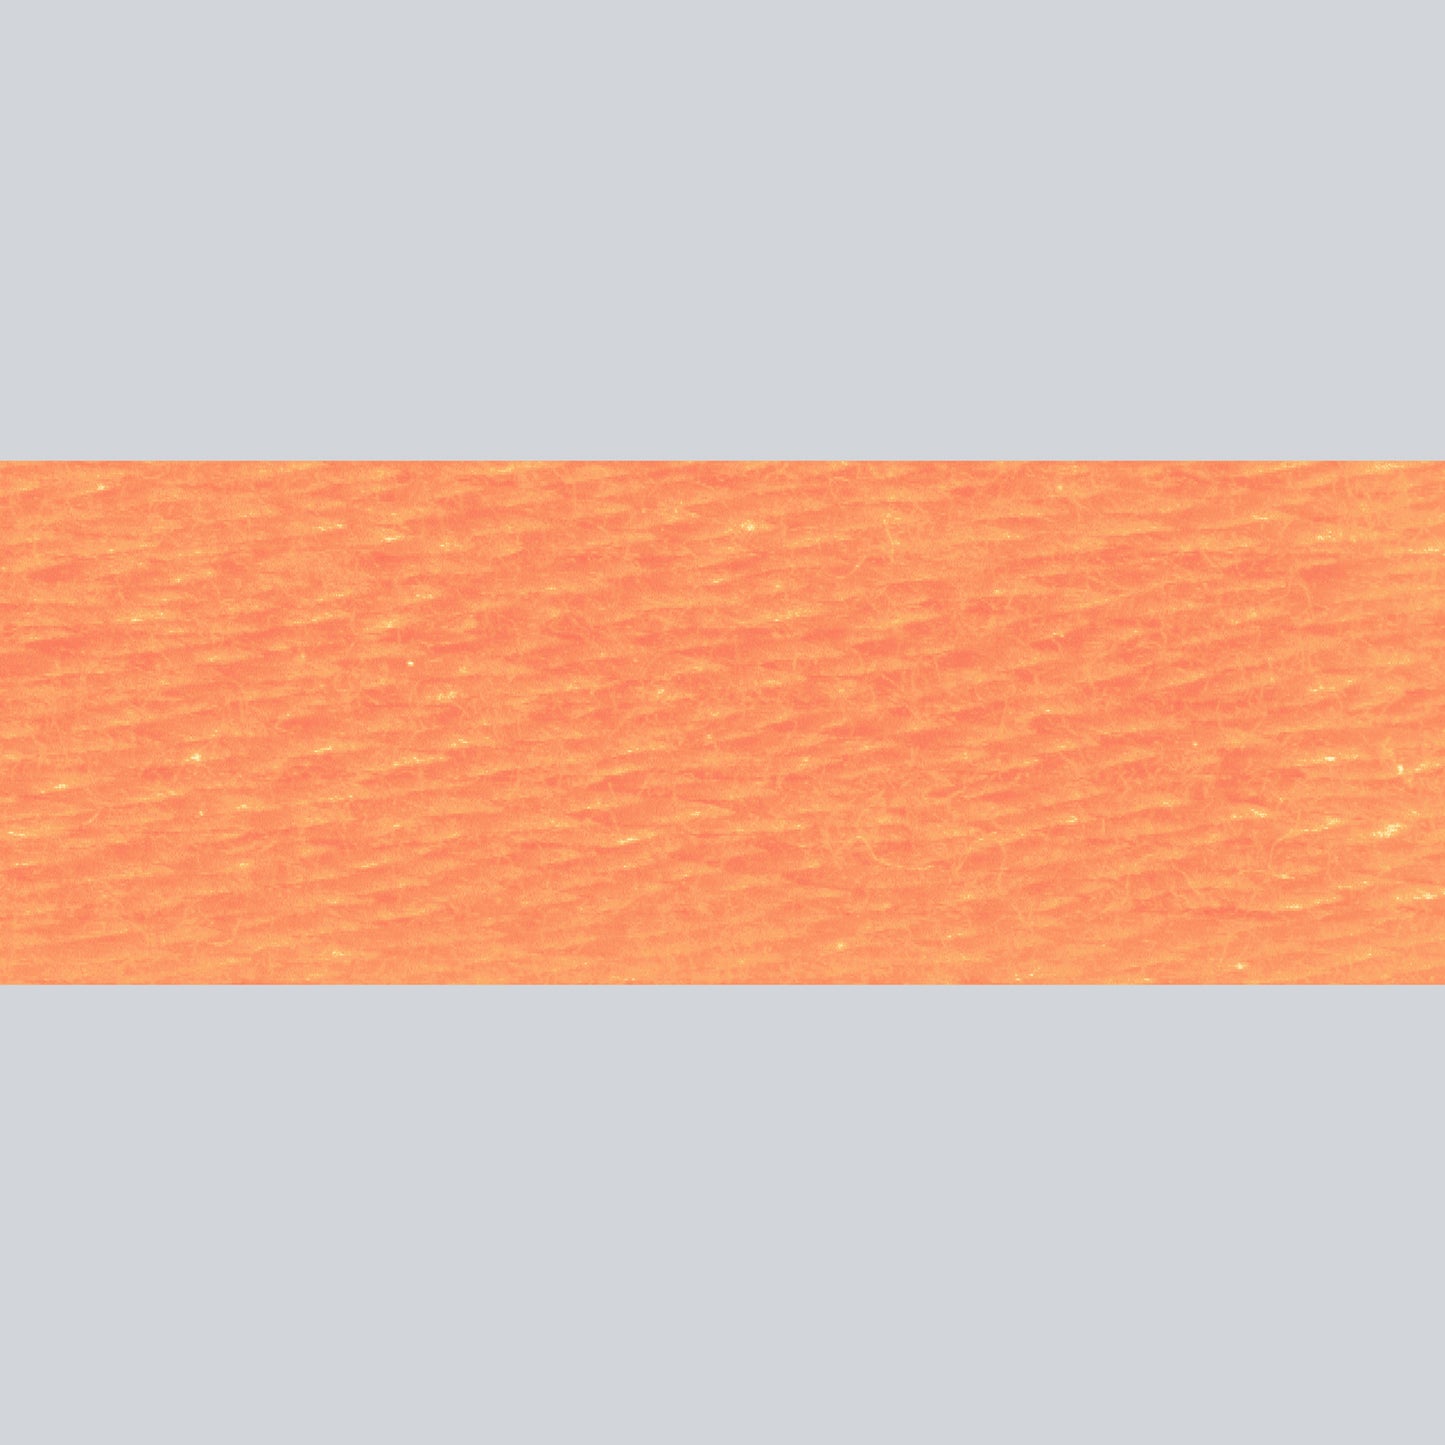 DMC Embroidery Floss - 722 Light Orange Spice Alternative View #1